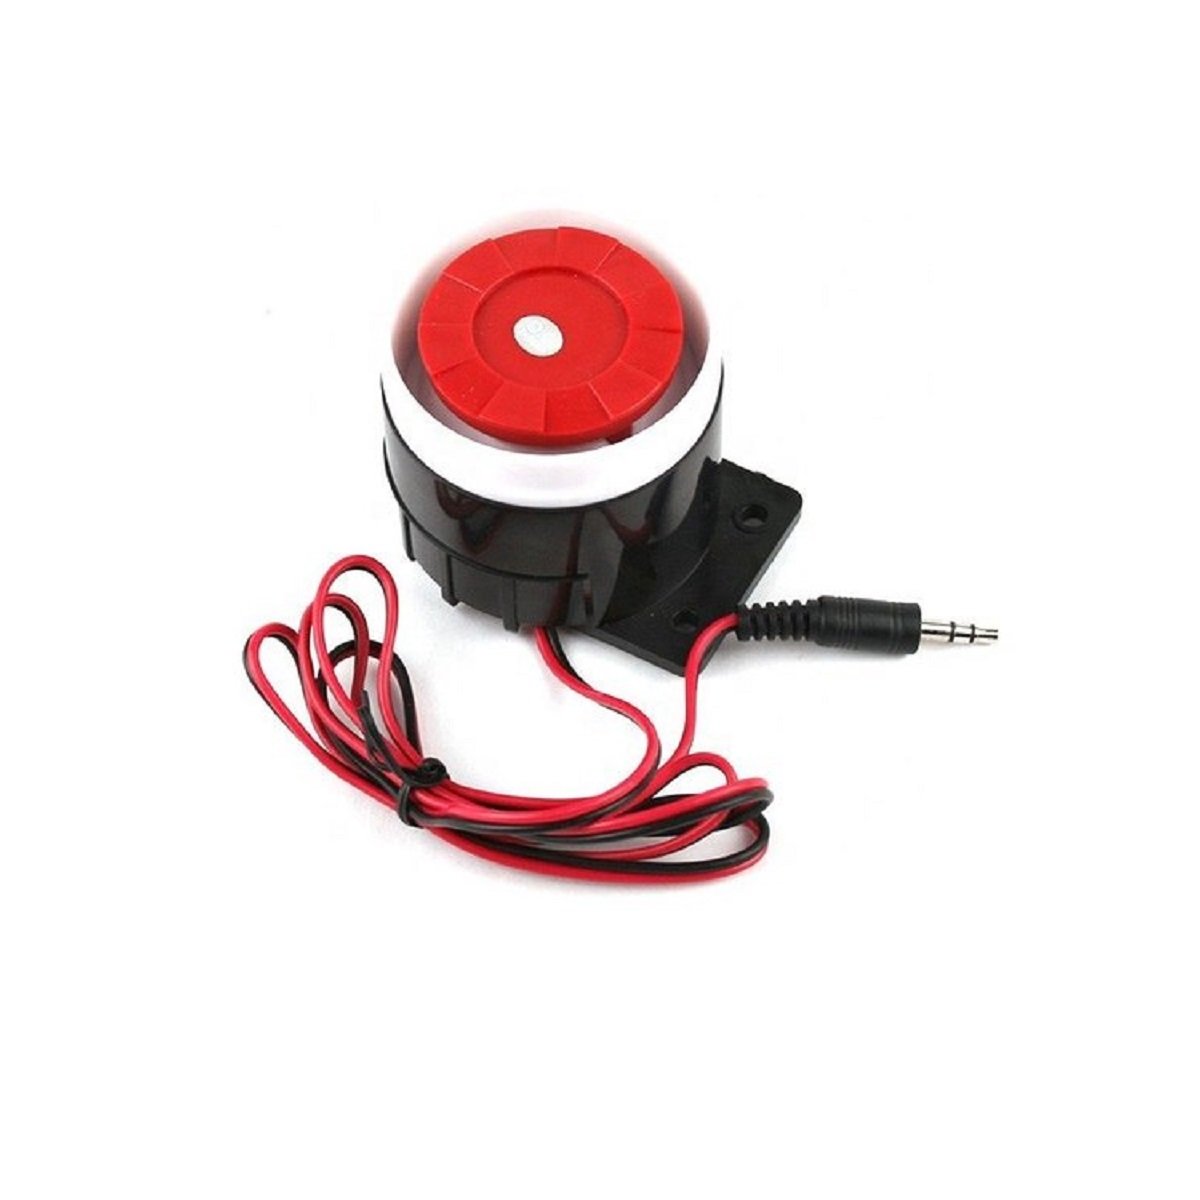 Liobaba DC Piezo Electronic Buzzer Alarm Siren Security Horn 12V DC Electronic Buzzer Alarm Siren Security Horn 120 dB Alarm Siren